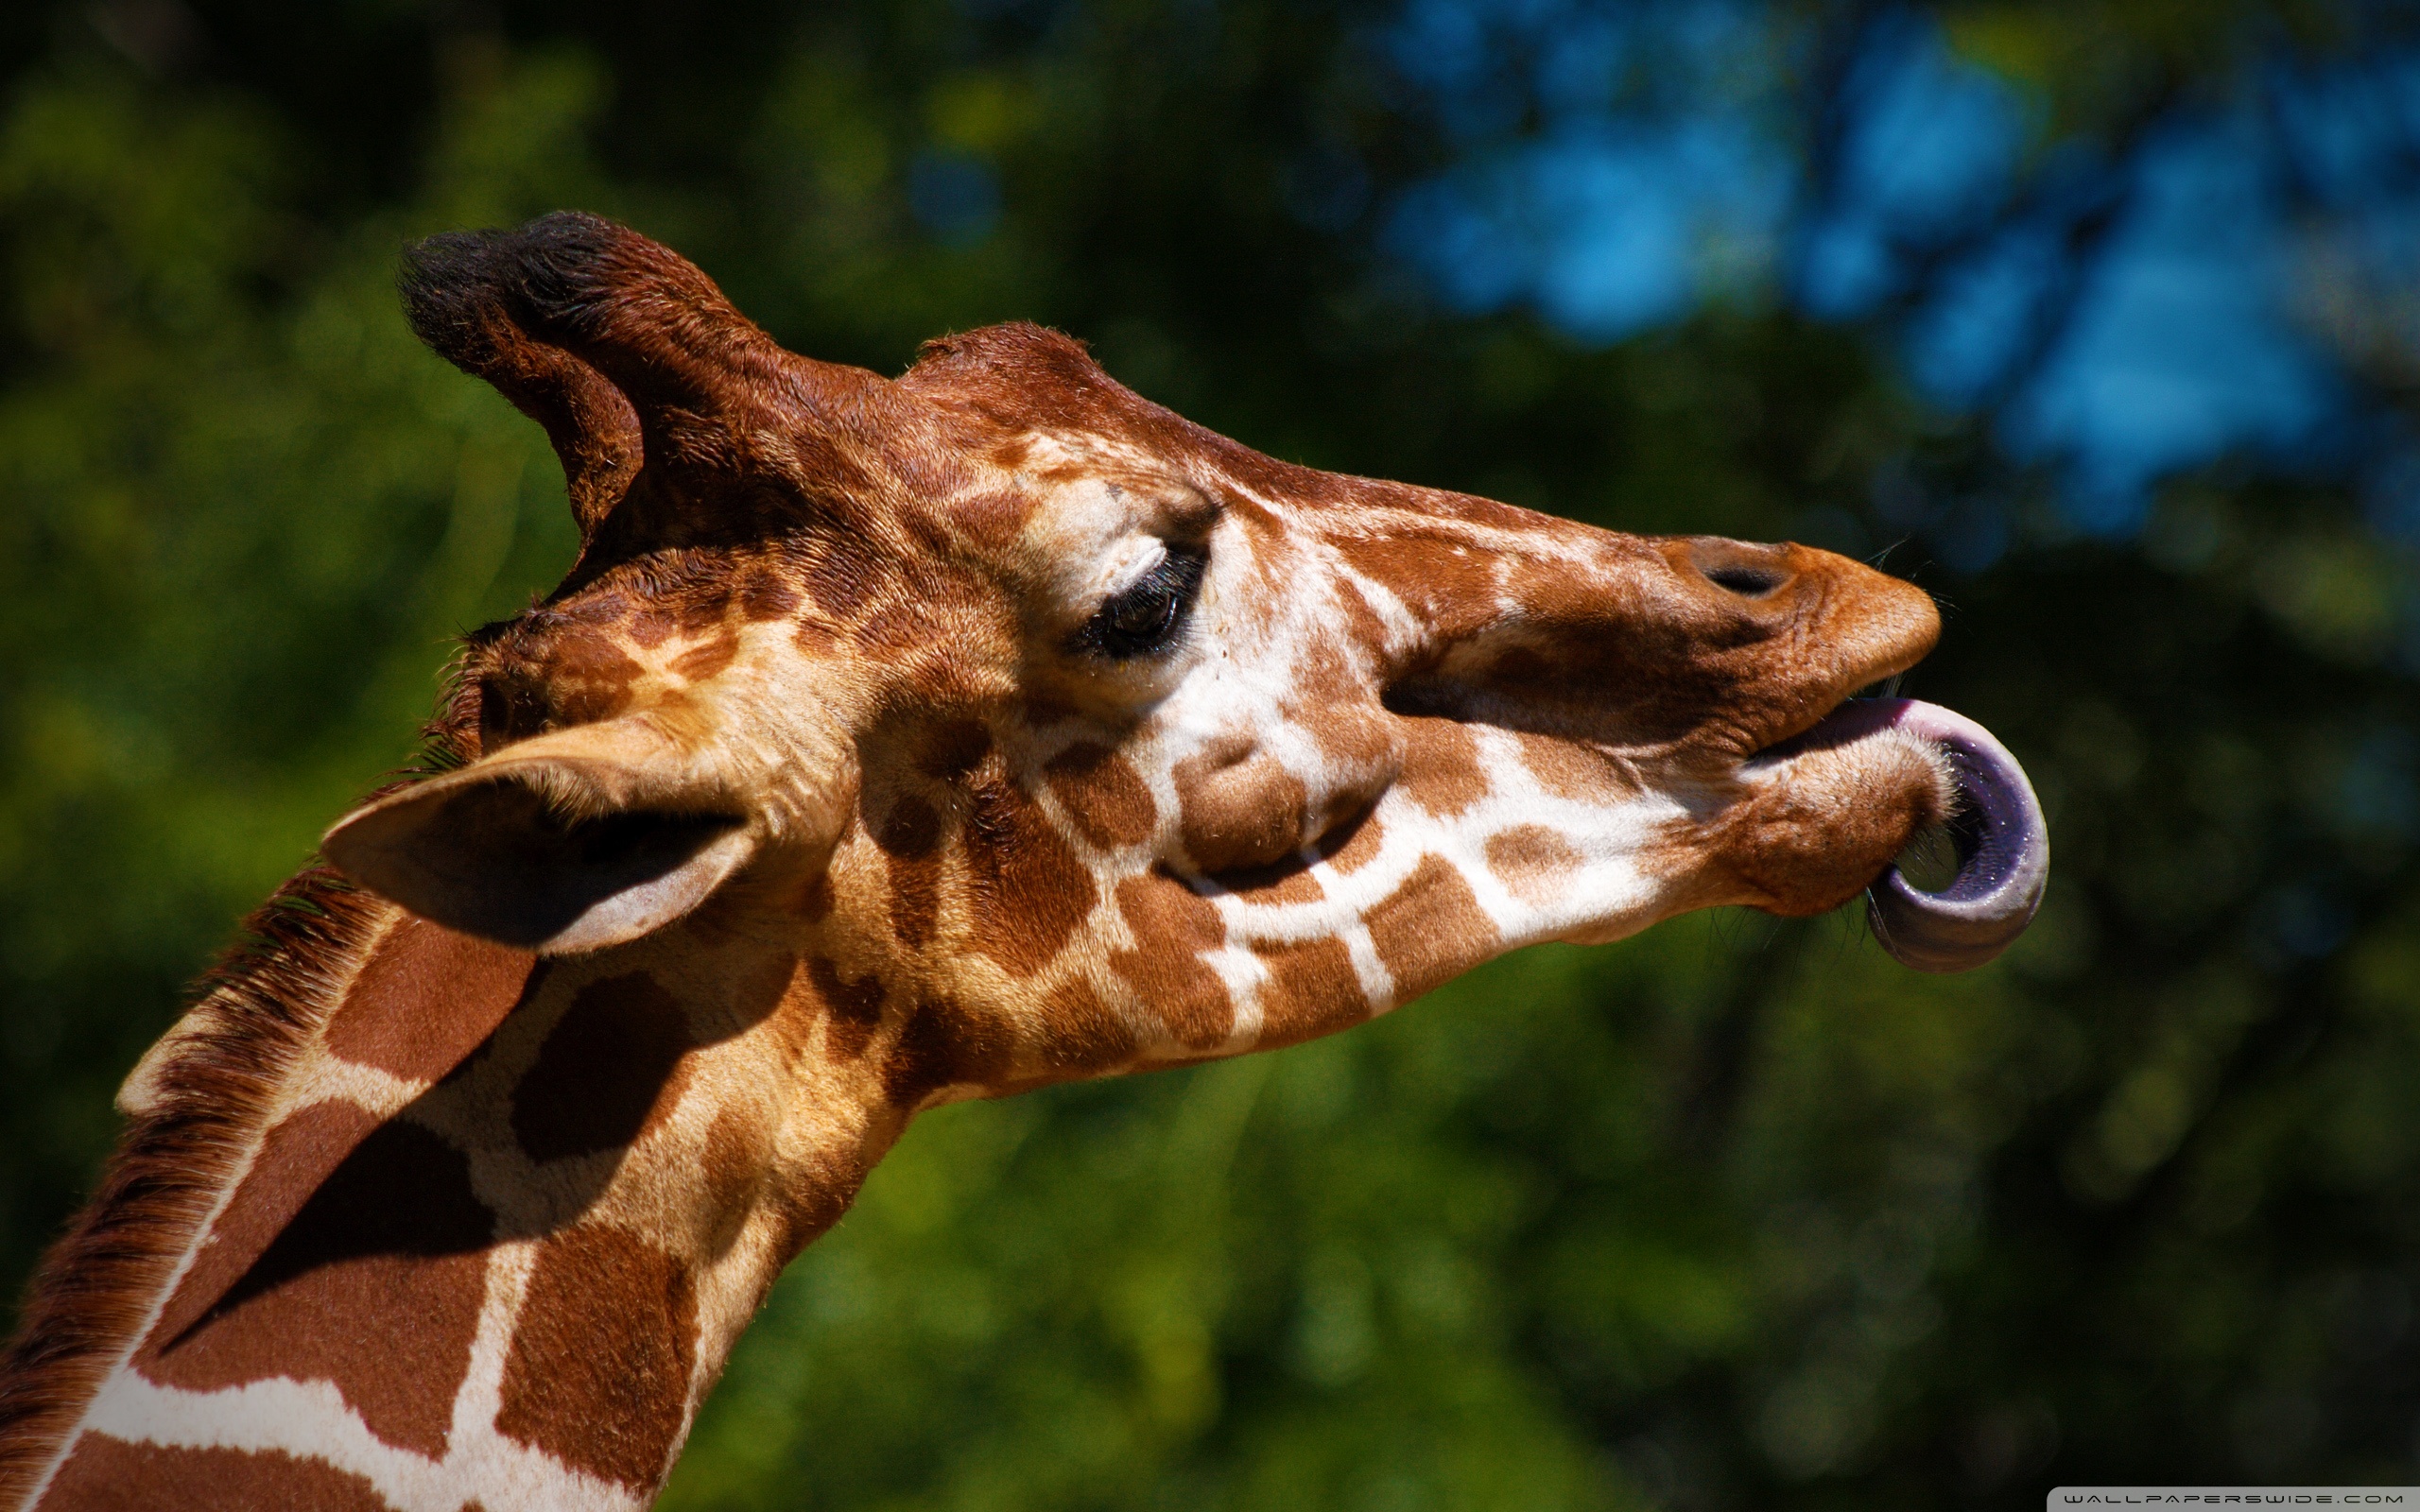 Giraffe Sticking Its Tongue Out Ultra HD Desktop Background Wallpaper for 4K UHD TV, Tablet